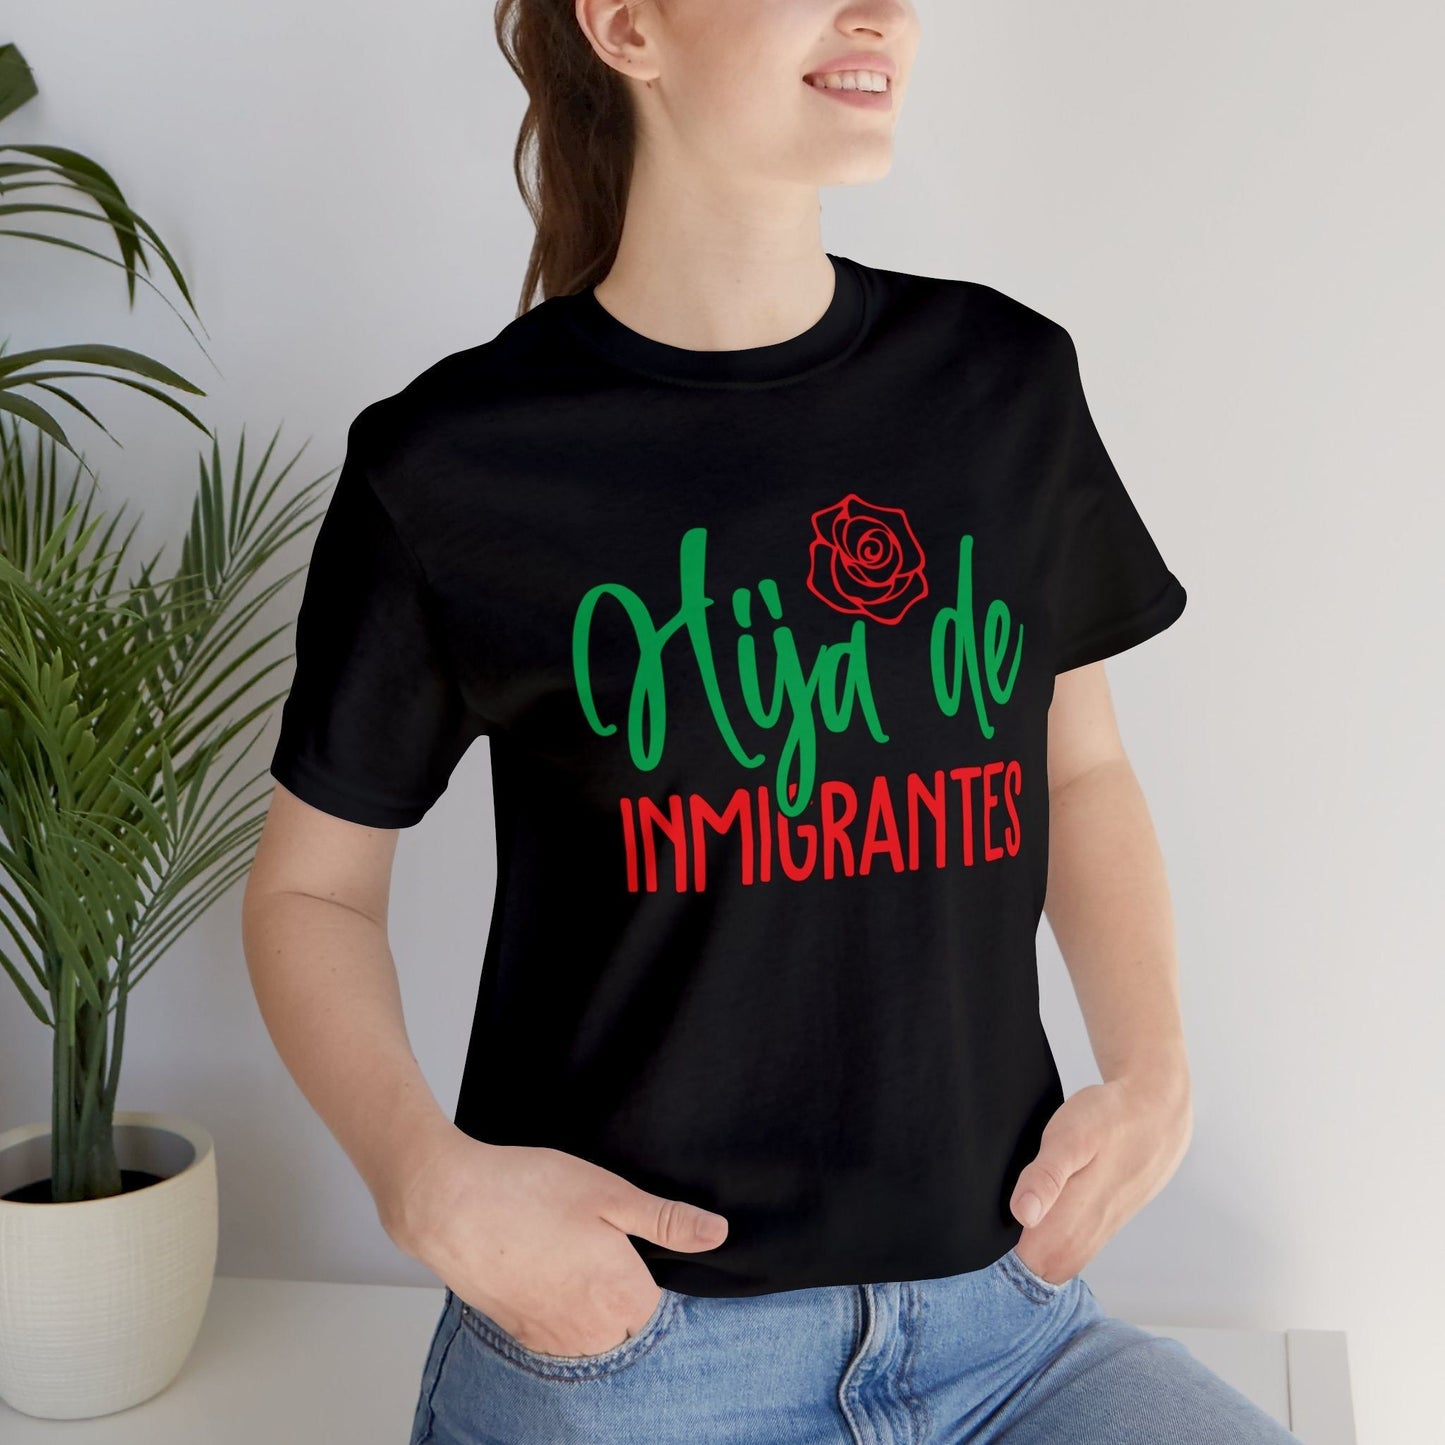 Camiseta - HIja de Inmigrantes